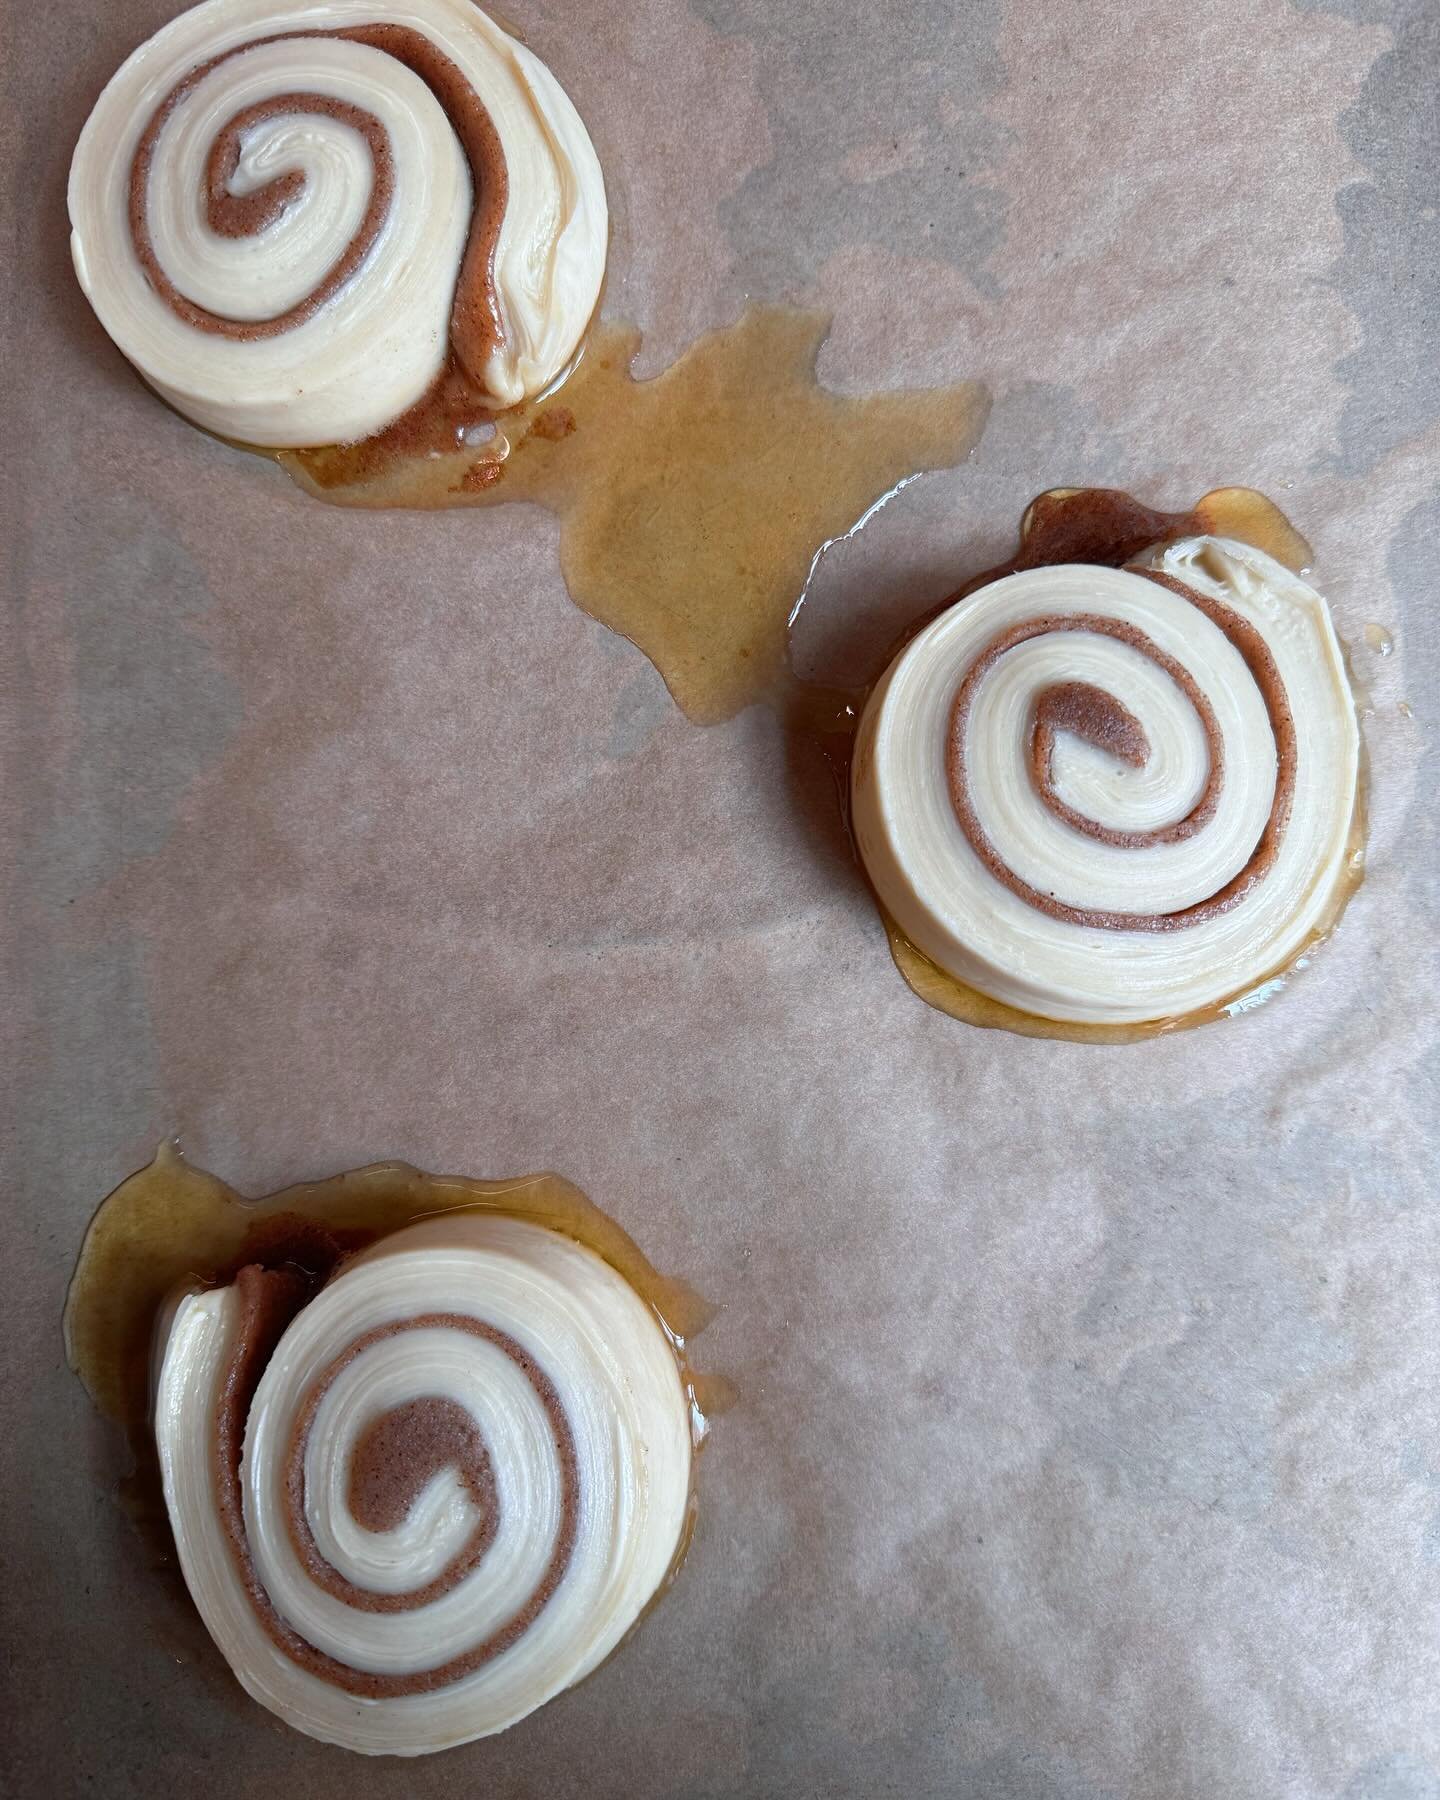 Crispy cinnamon rolls on rotation every Saturday. Just so everyone knows.